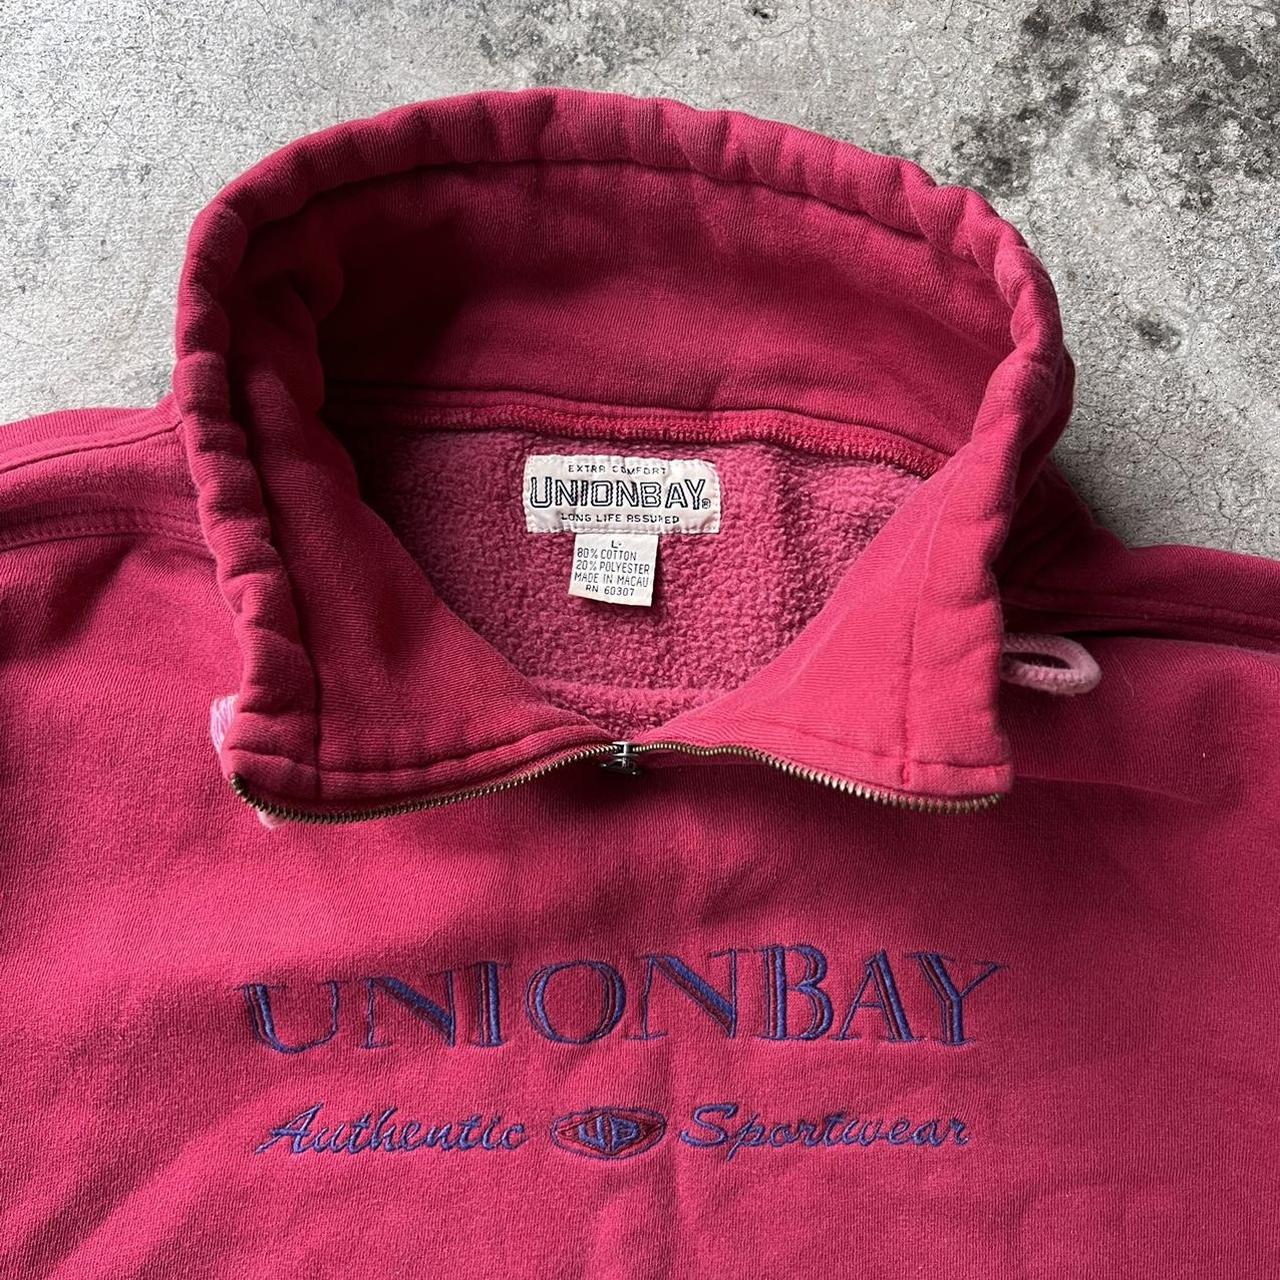 Union Bay Men's Red Sweatshirt (2)